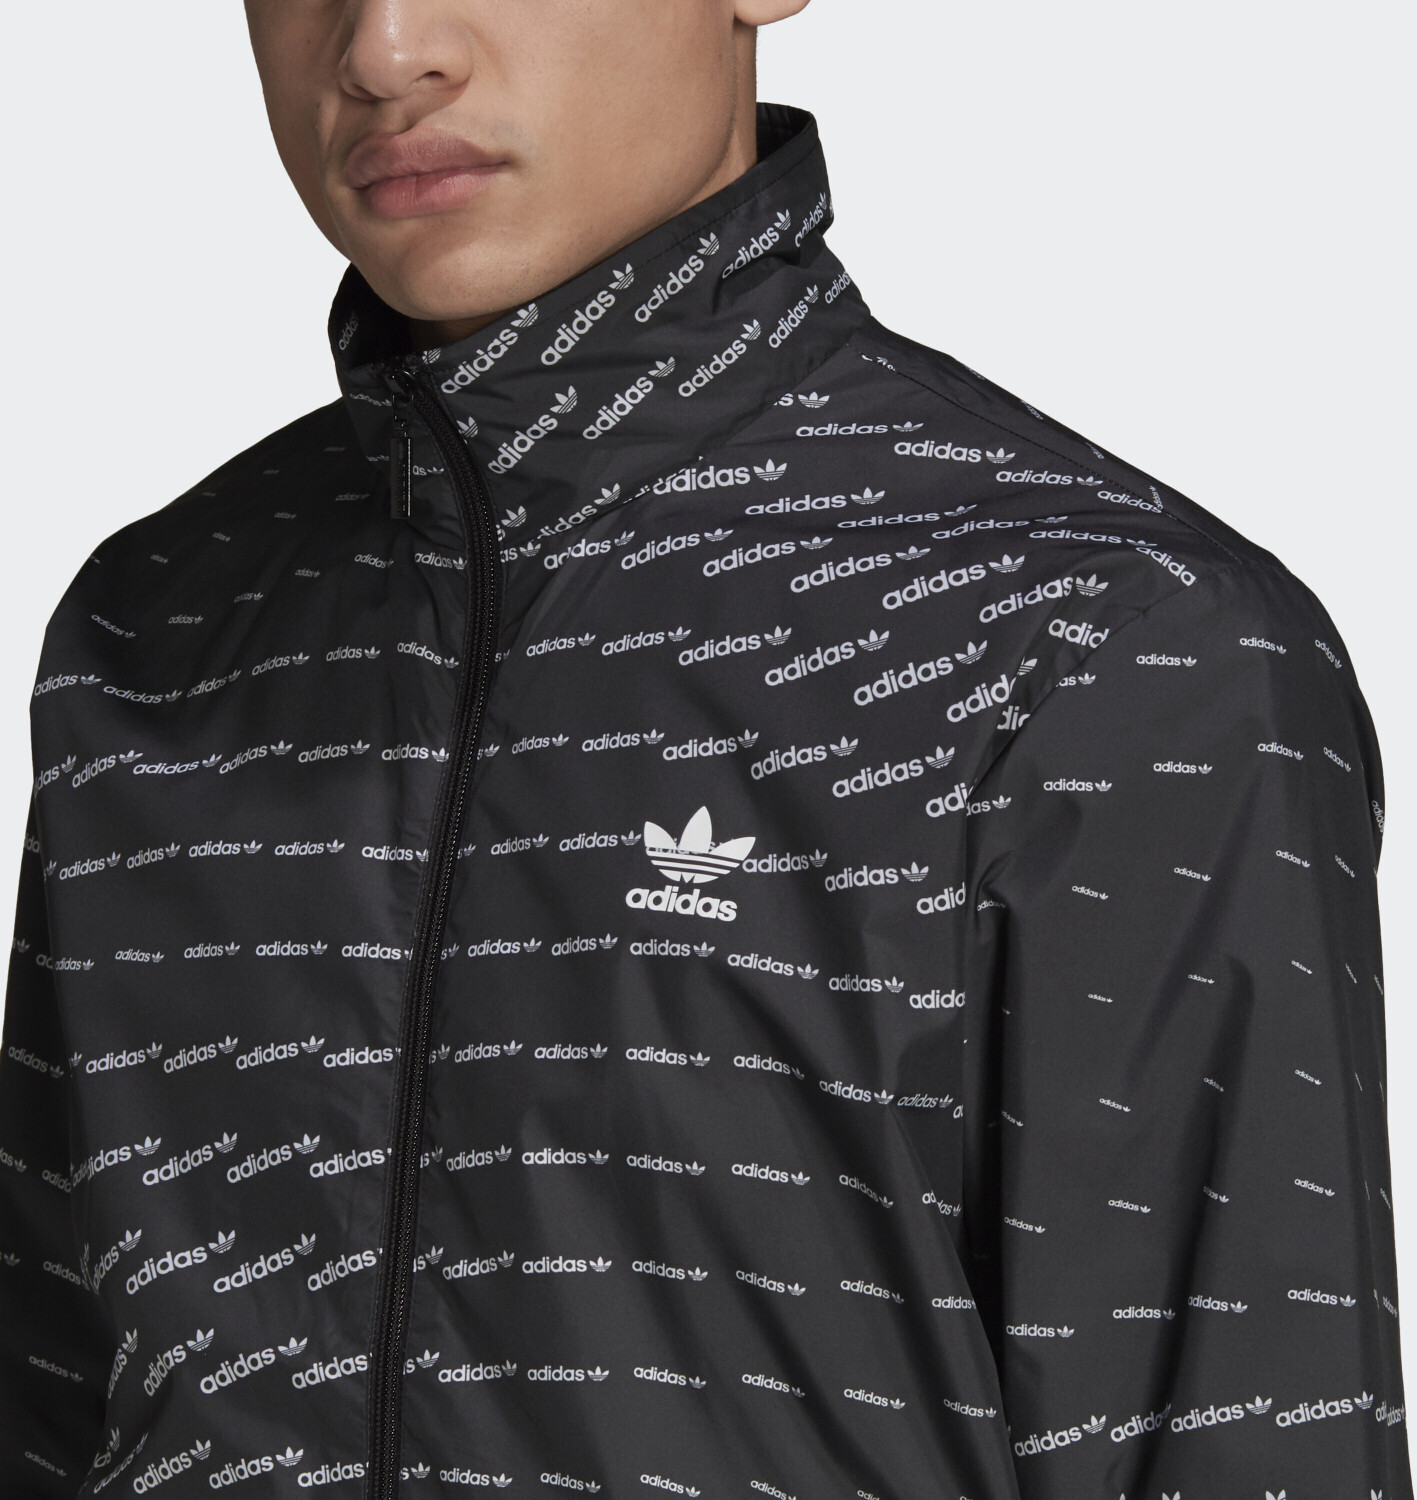 Adidas Graphics Monogram € Originals Jacket (H13485) bei | black/white 39,95 Preisvergleich ab